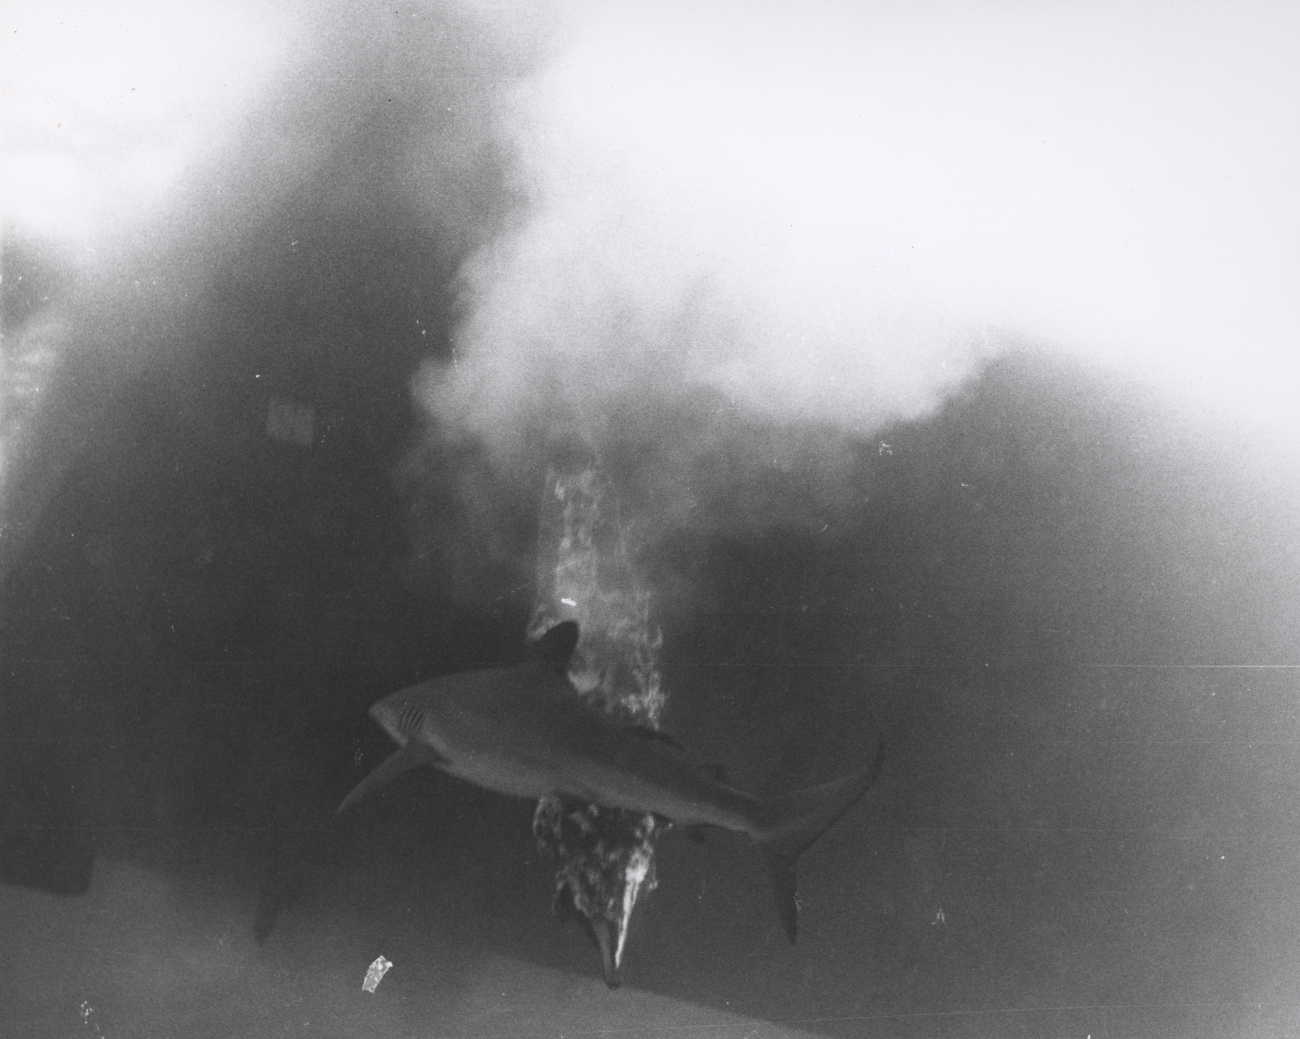 Dead porpoise being eaten by sharks under a cloud of dissolved bluestone